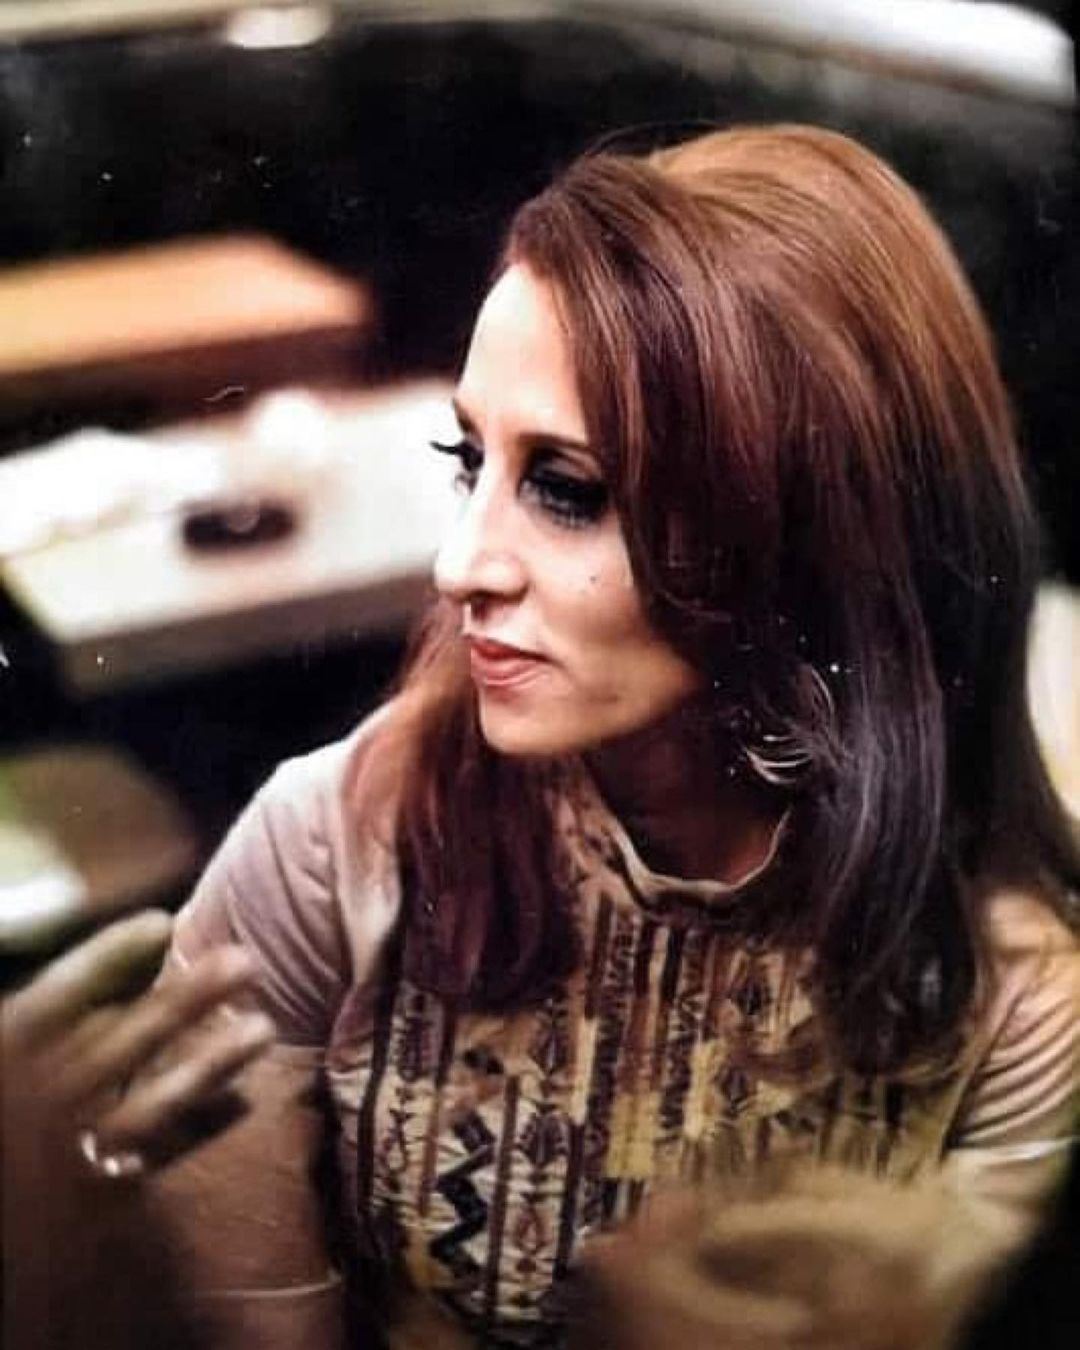 Unique Photos for Legendary Singer Fairouz back in Year 1971